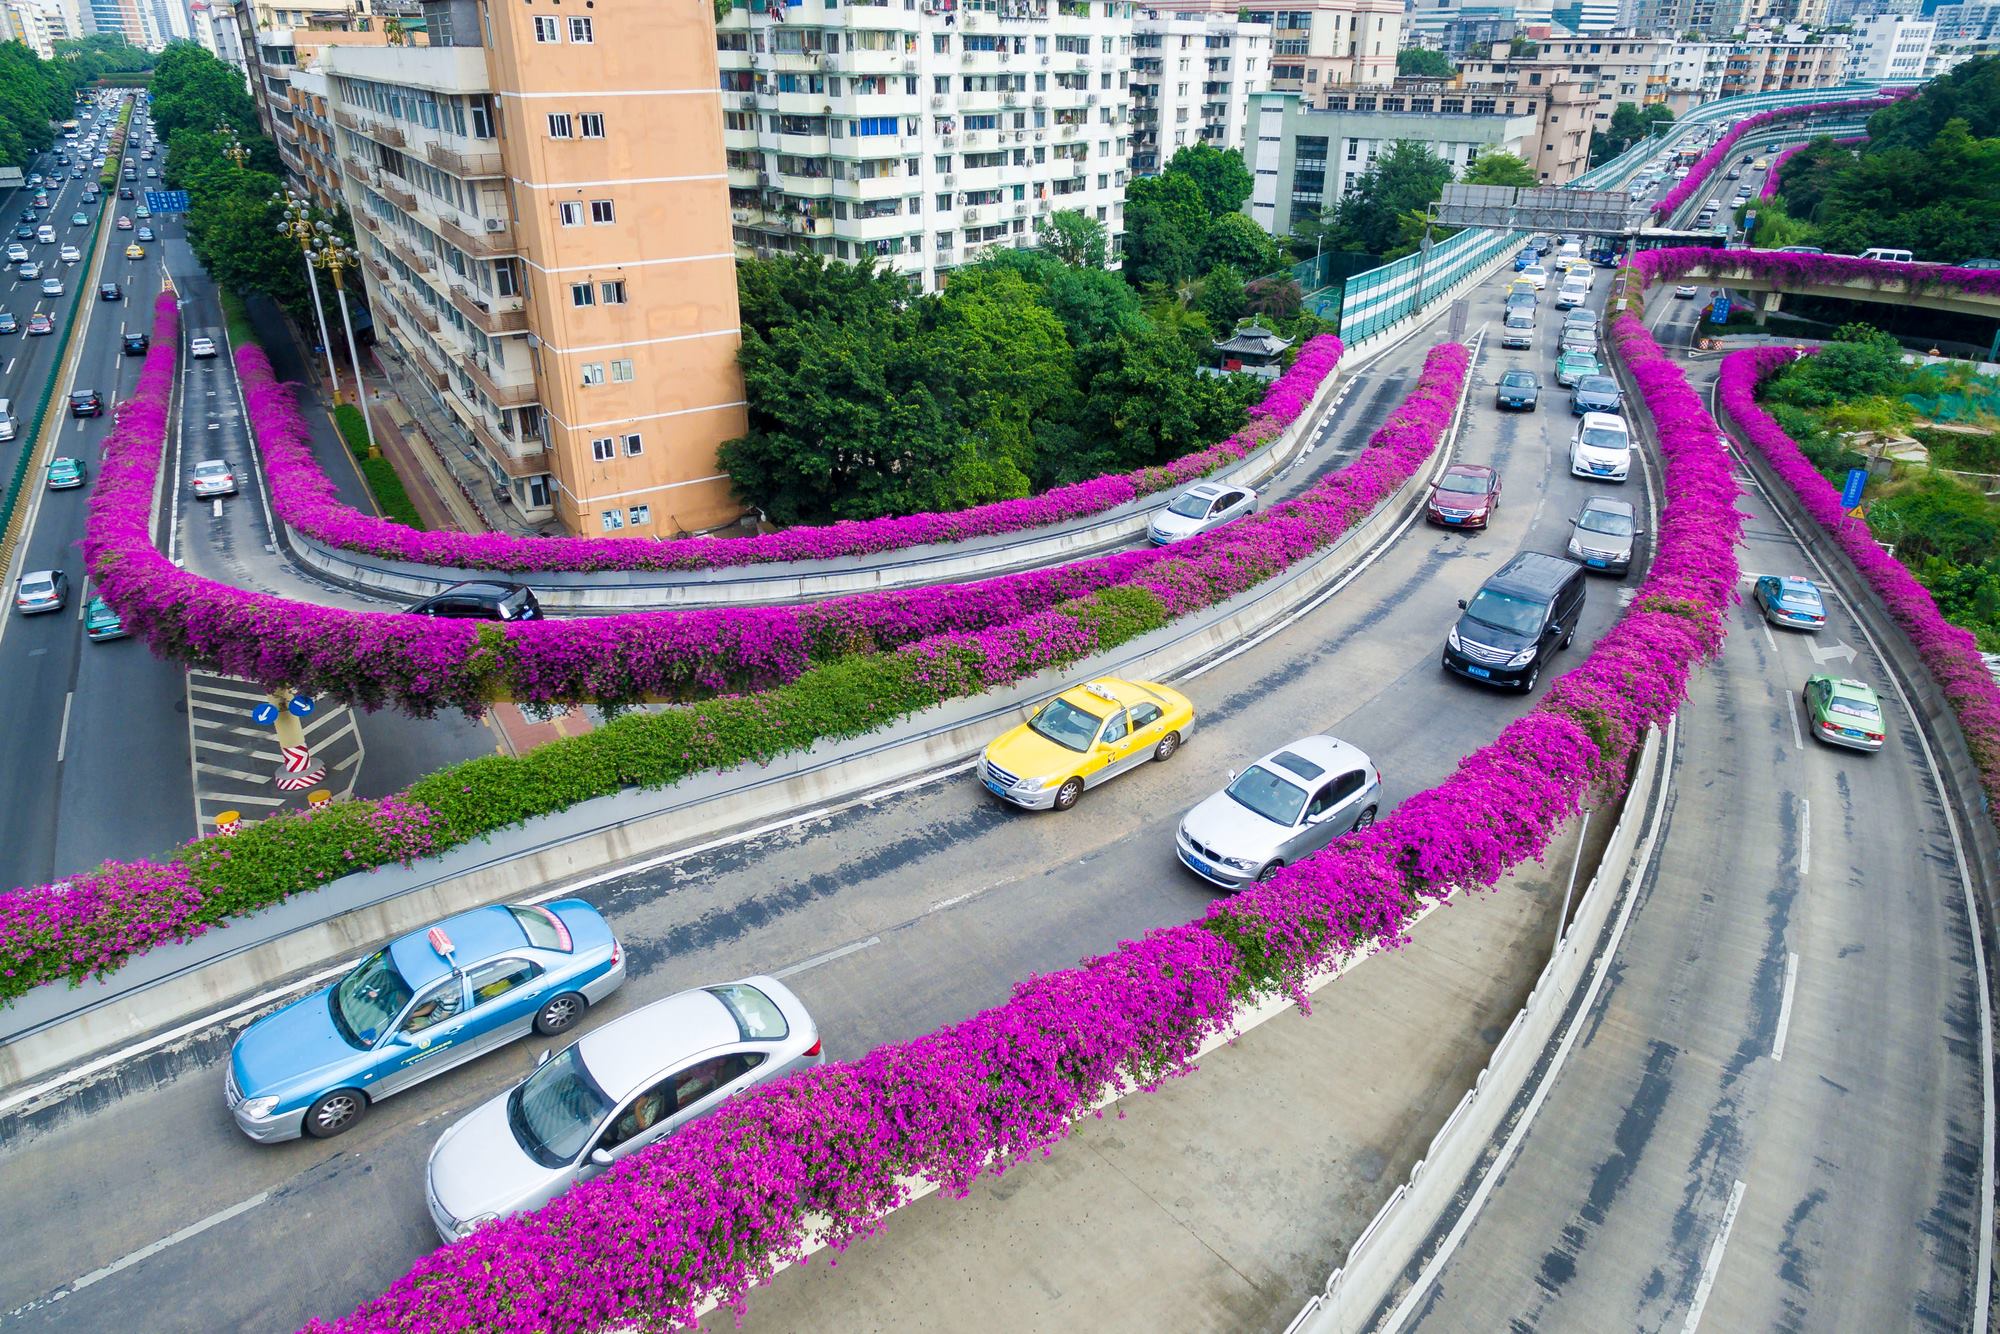 9 Foto cantiknya jalanan China, ditumbuhi bunga serasa di taman kota